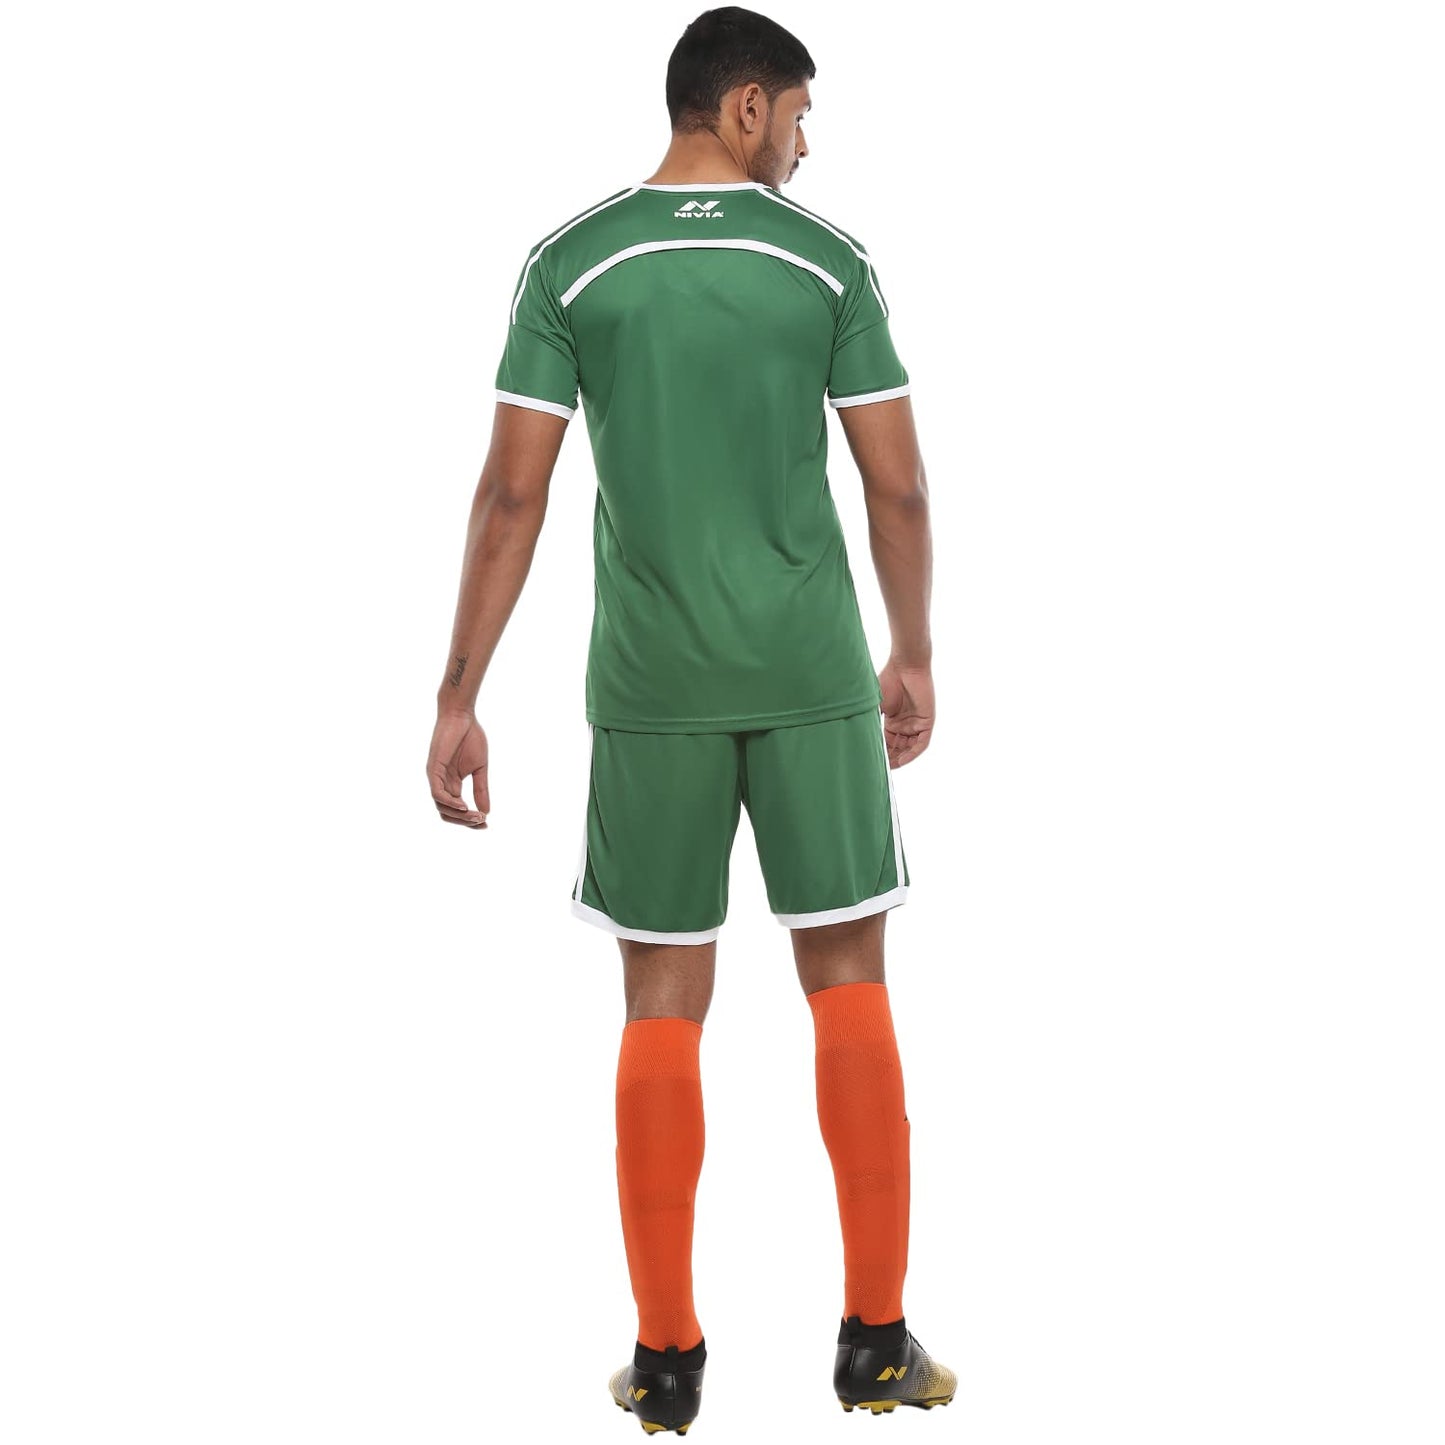 Nivia 2020 Ultra Jersey Set for Men, S.A Green/White - Best Price online Prokicksports.com